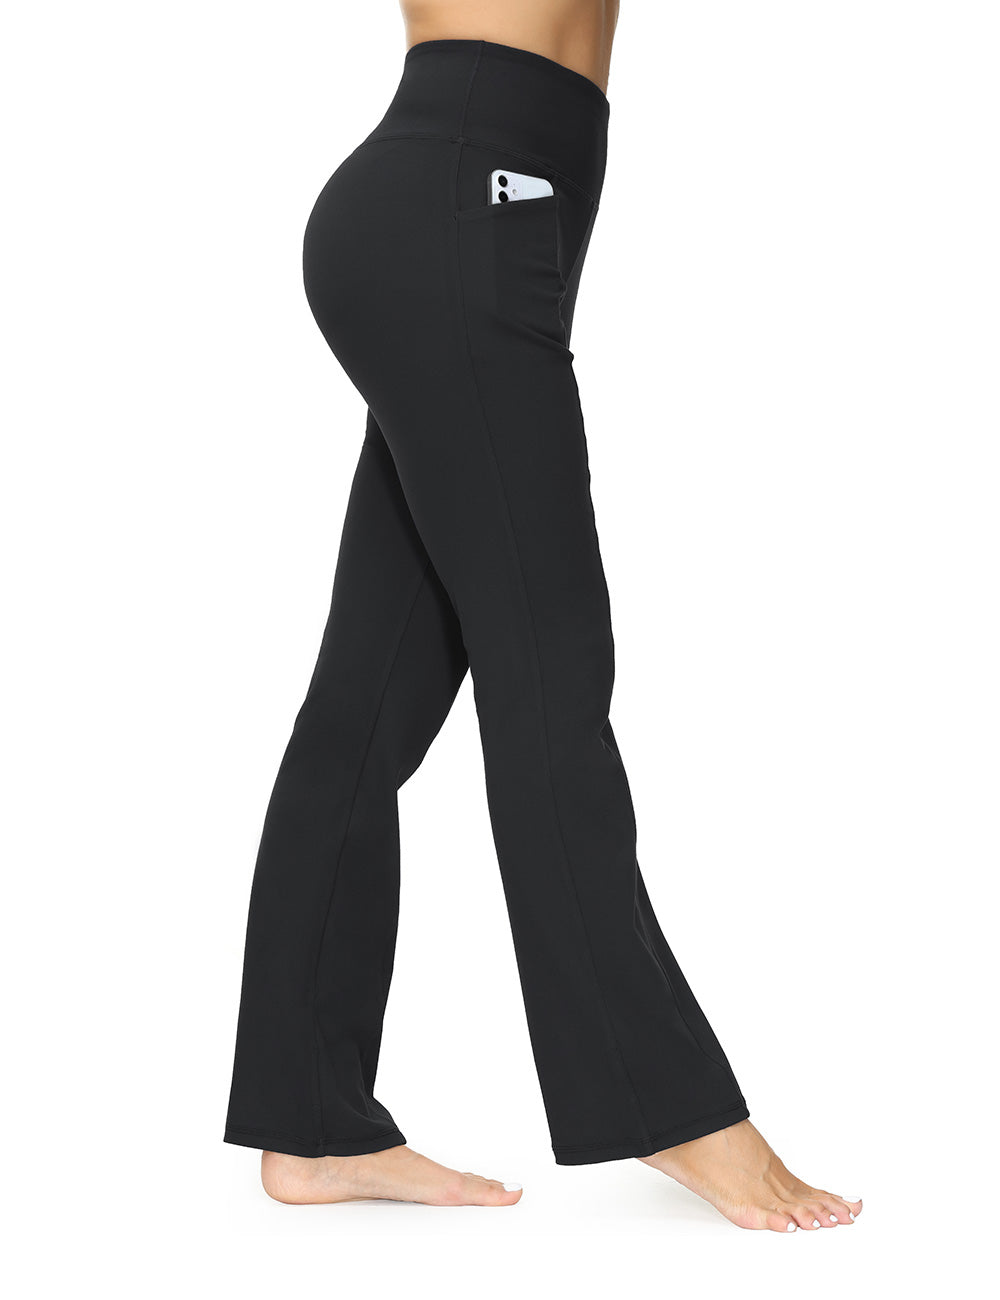 ALONG FIT Leggings for Women High Waist Yoga Pants Pantalon Femme